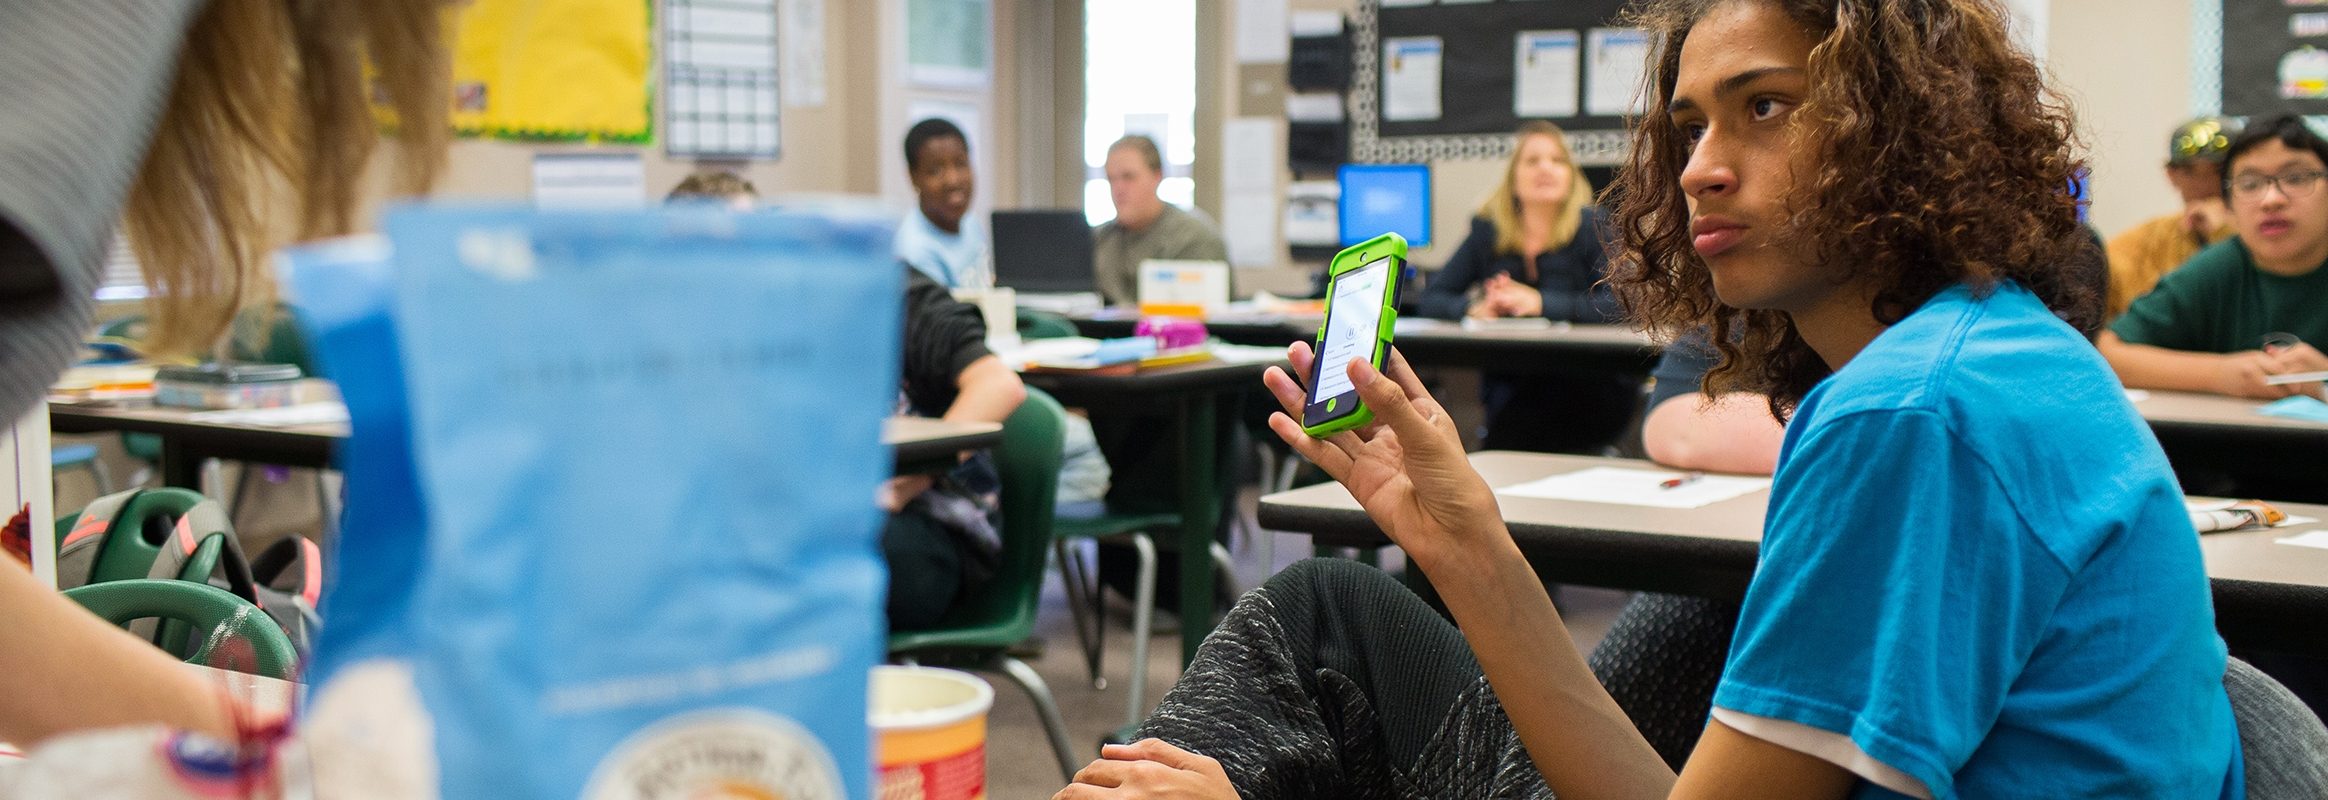 Boy using iPhone in classroom